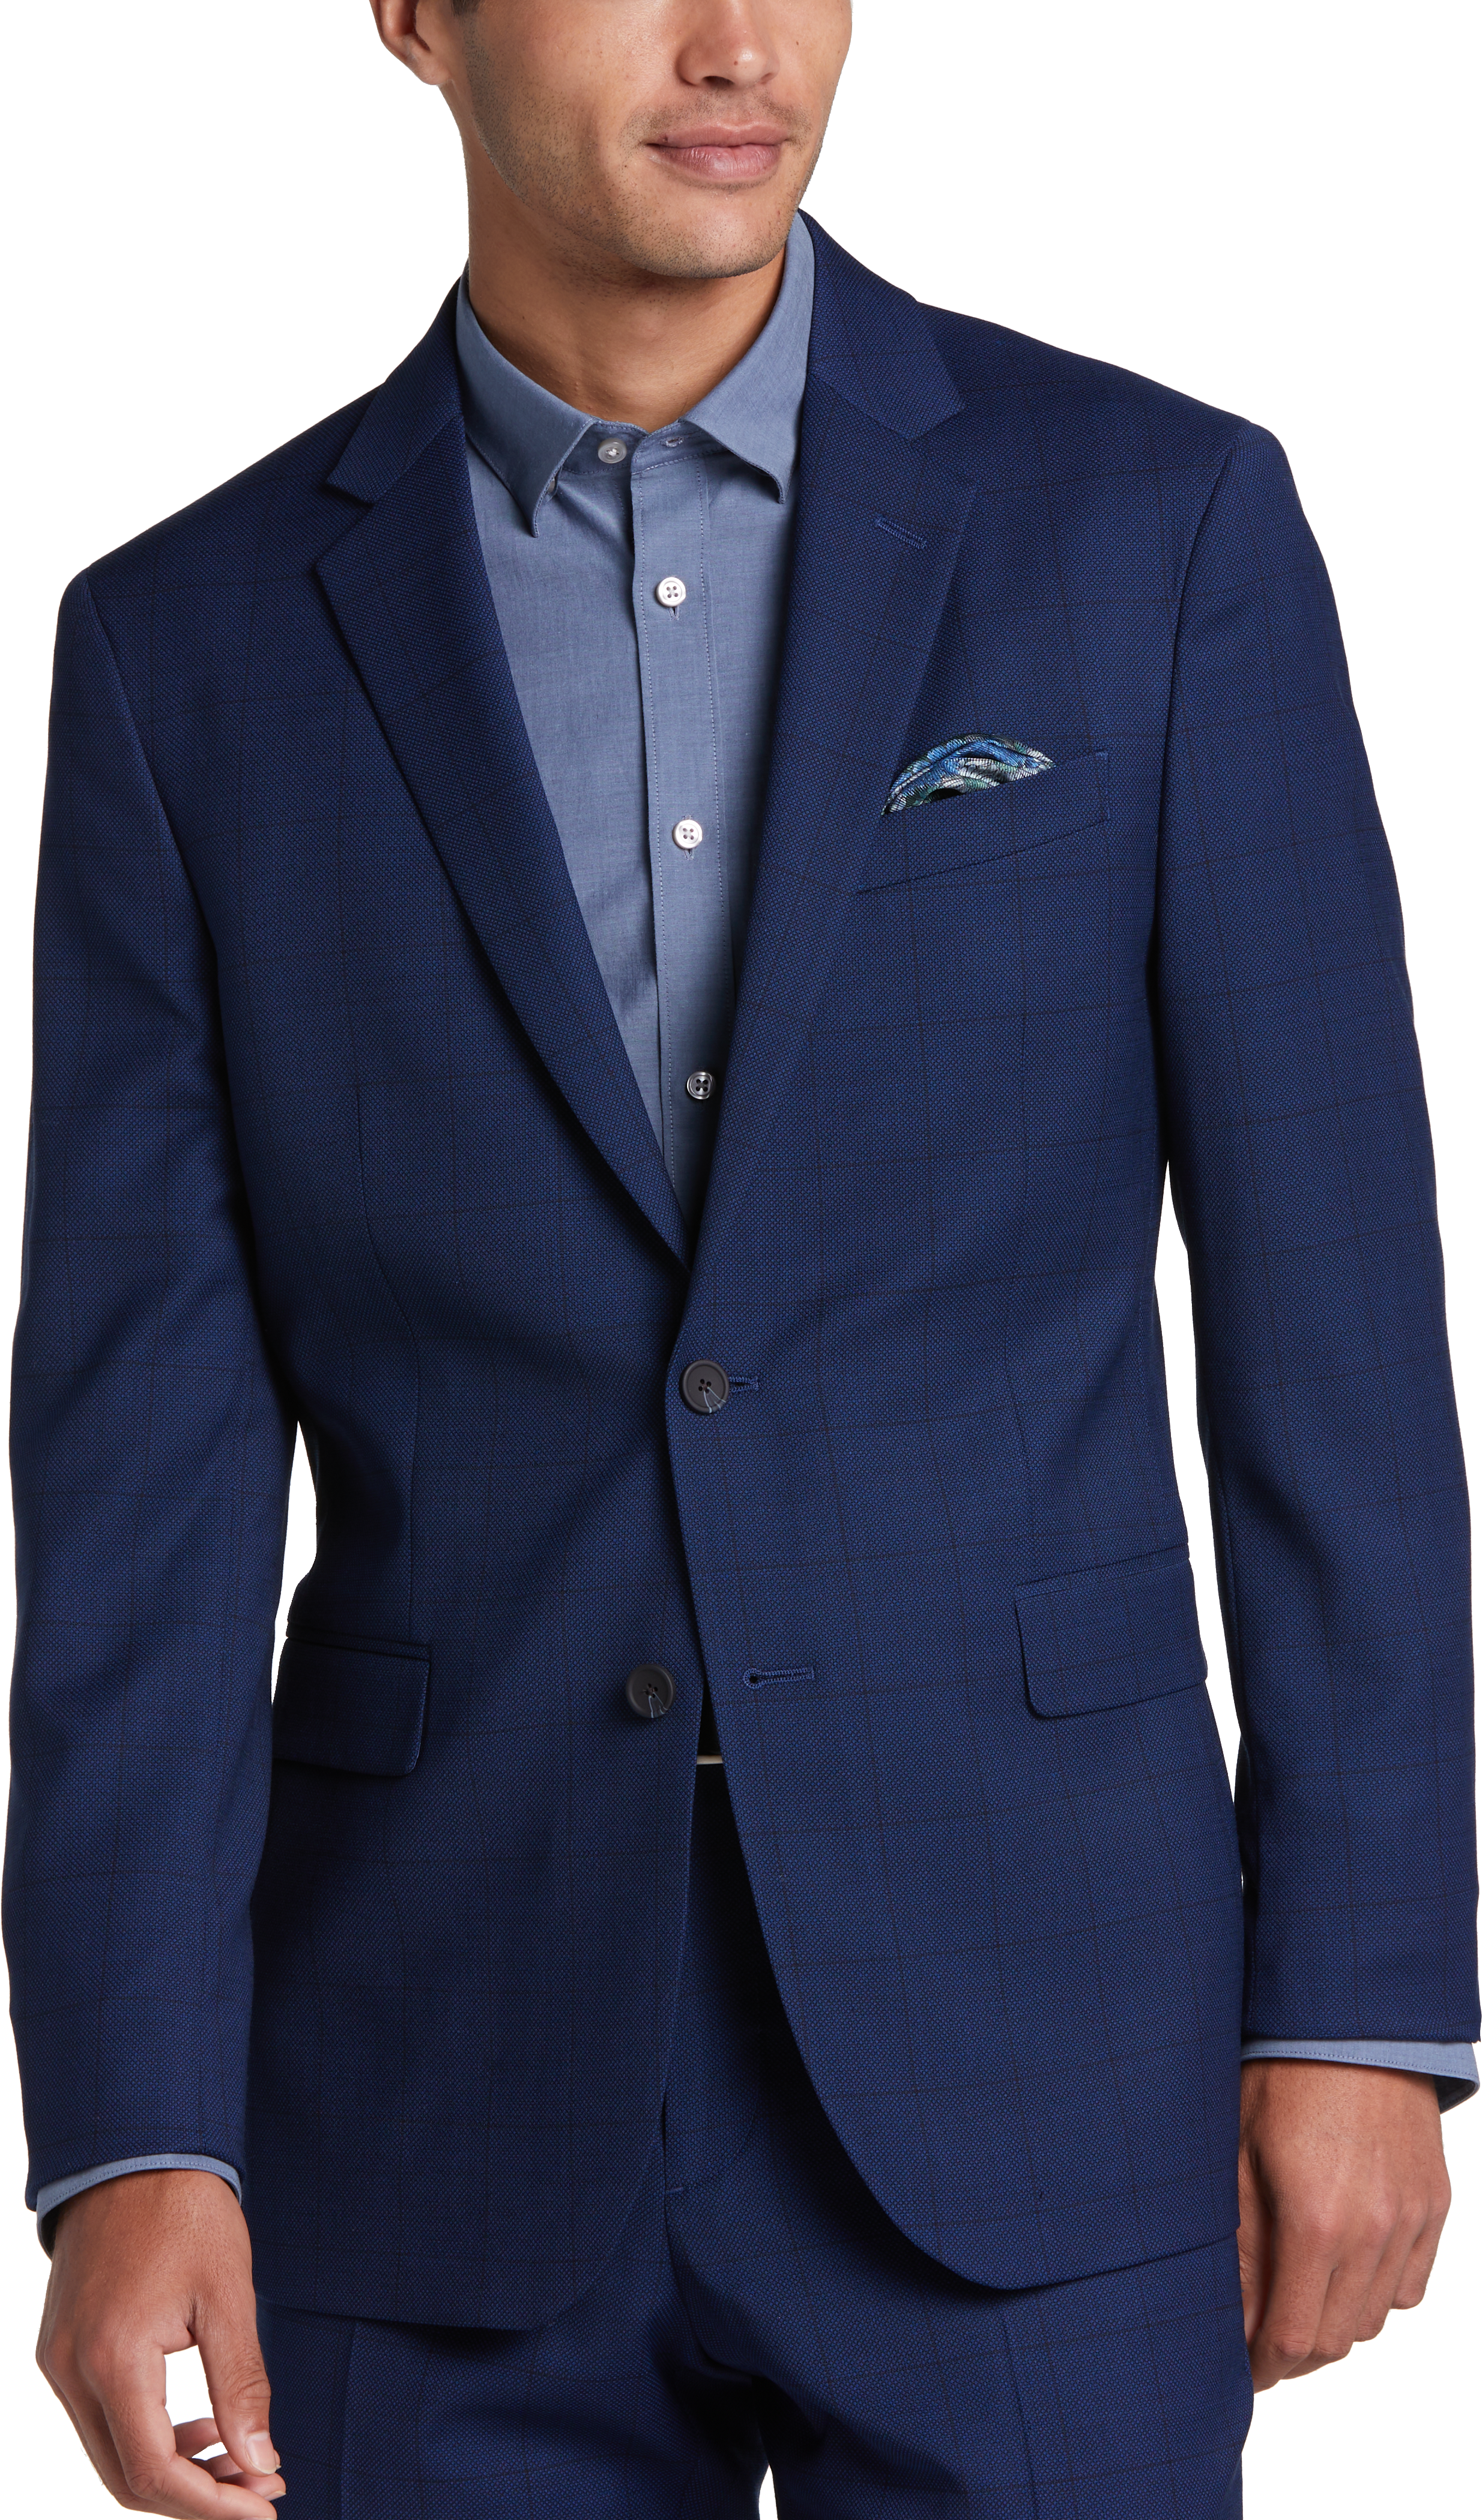 Awearness Kenneth Cole AWEAR-TECH Slim Fit Suit, Blue Plaid - Men's ...